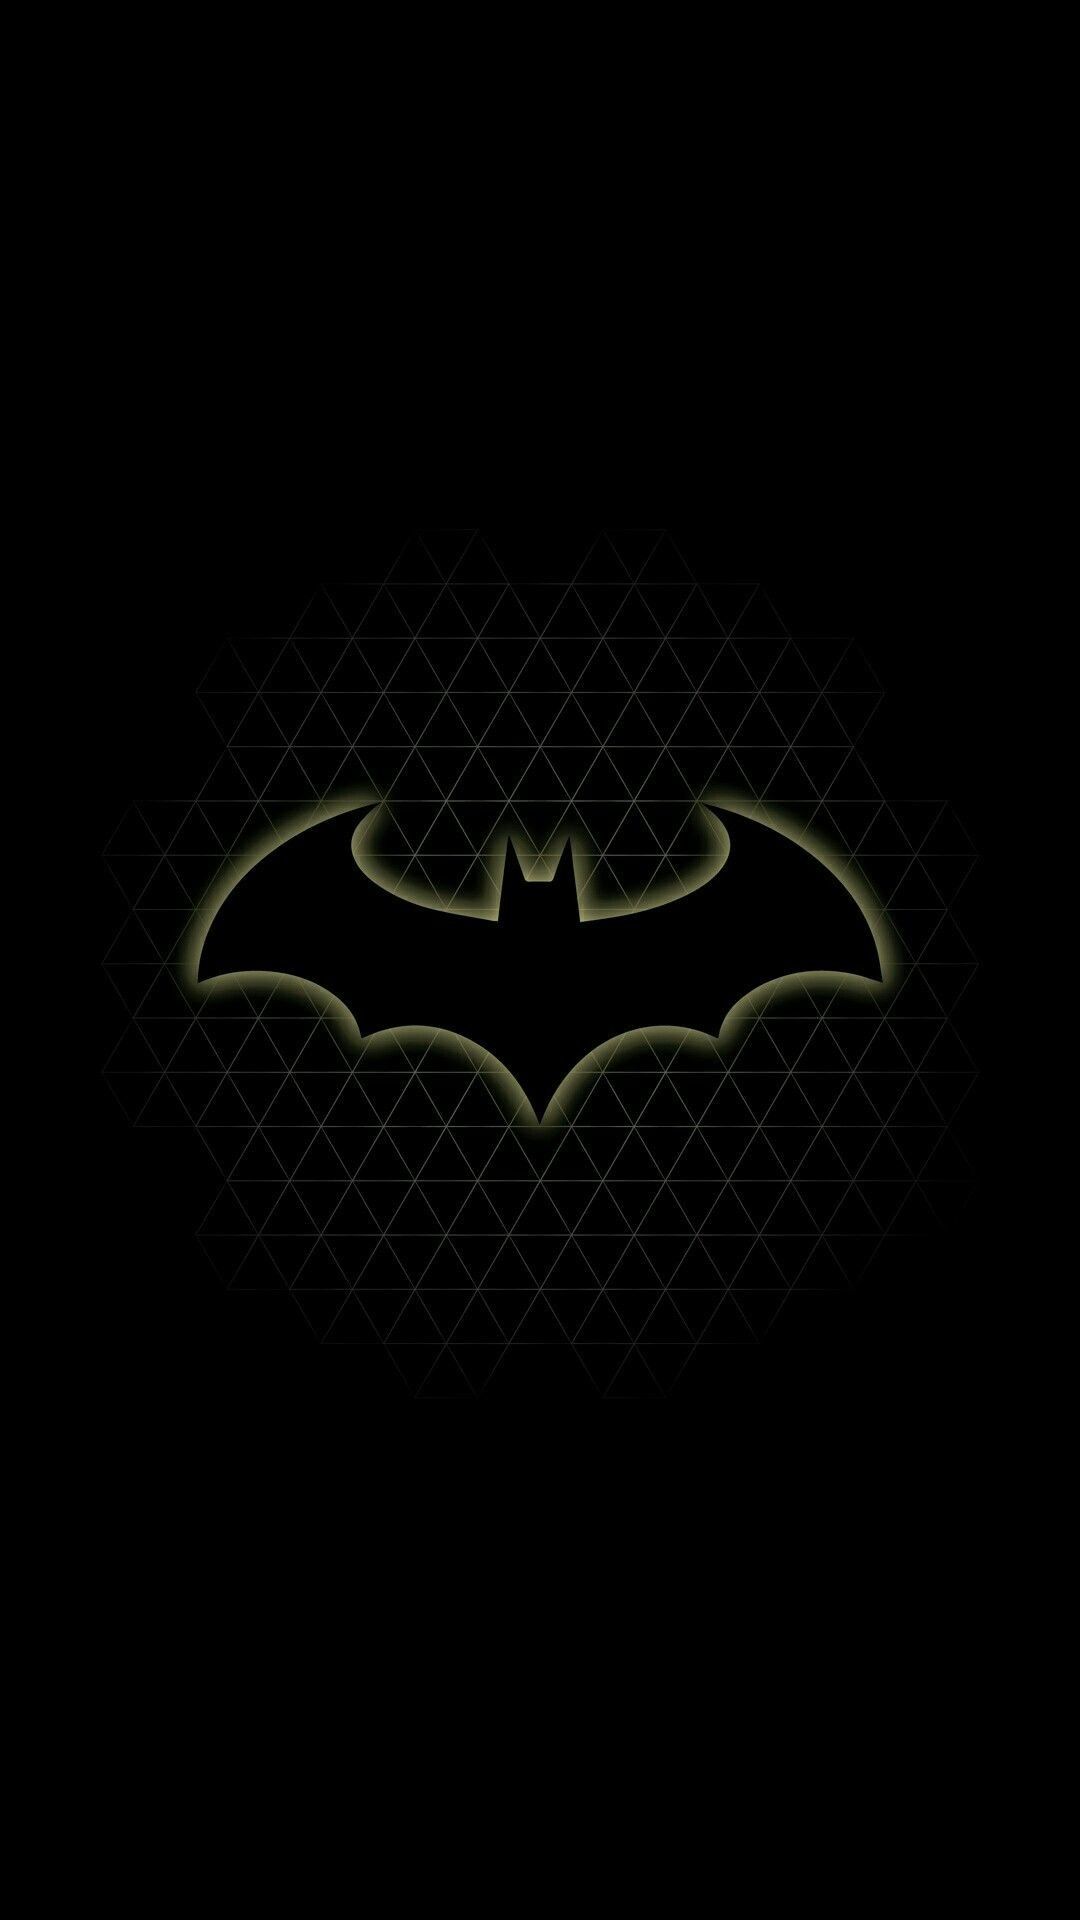 Batman Iphone Wallpaper - KoLPaPer - Awesome Free HD Wallpapers